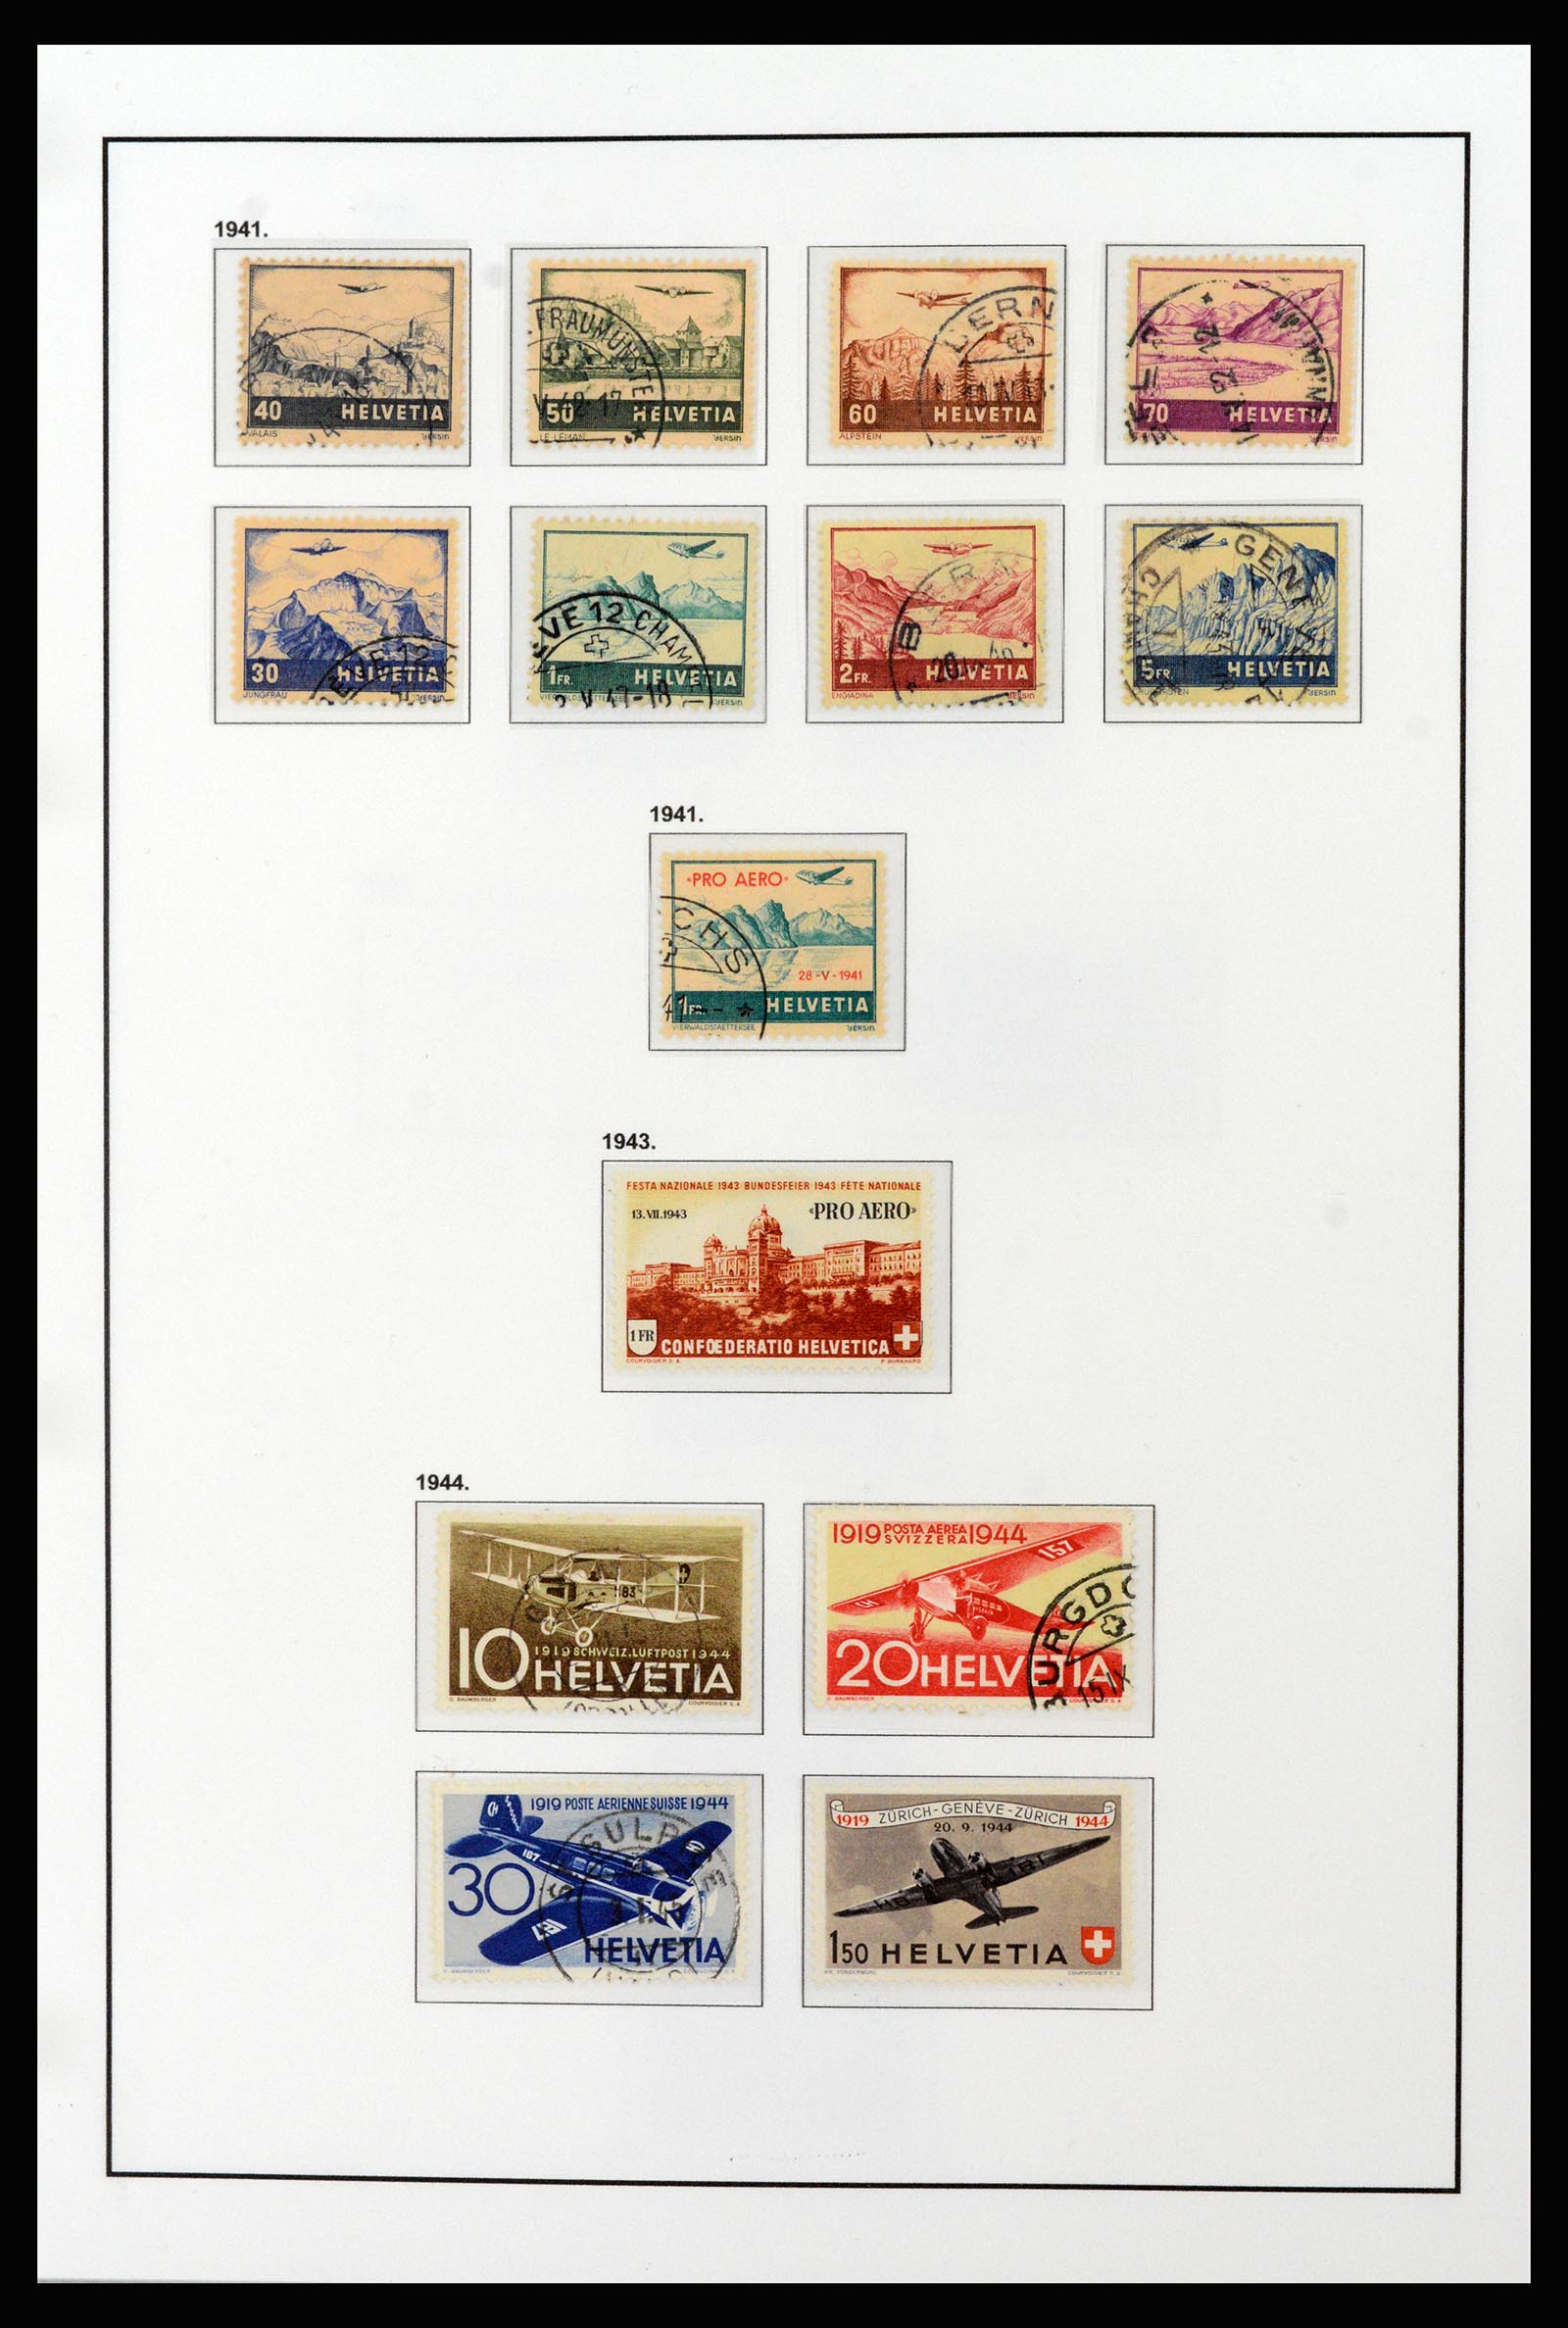 37225 097 - Stamp collection 37225 Switzerland 1854-2020.